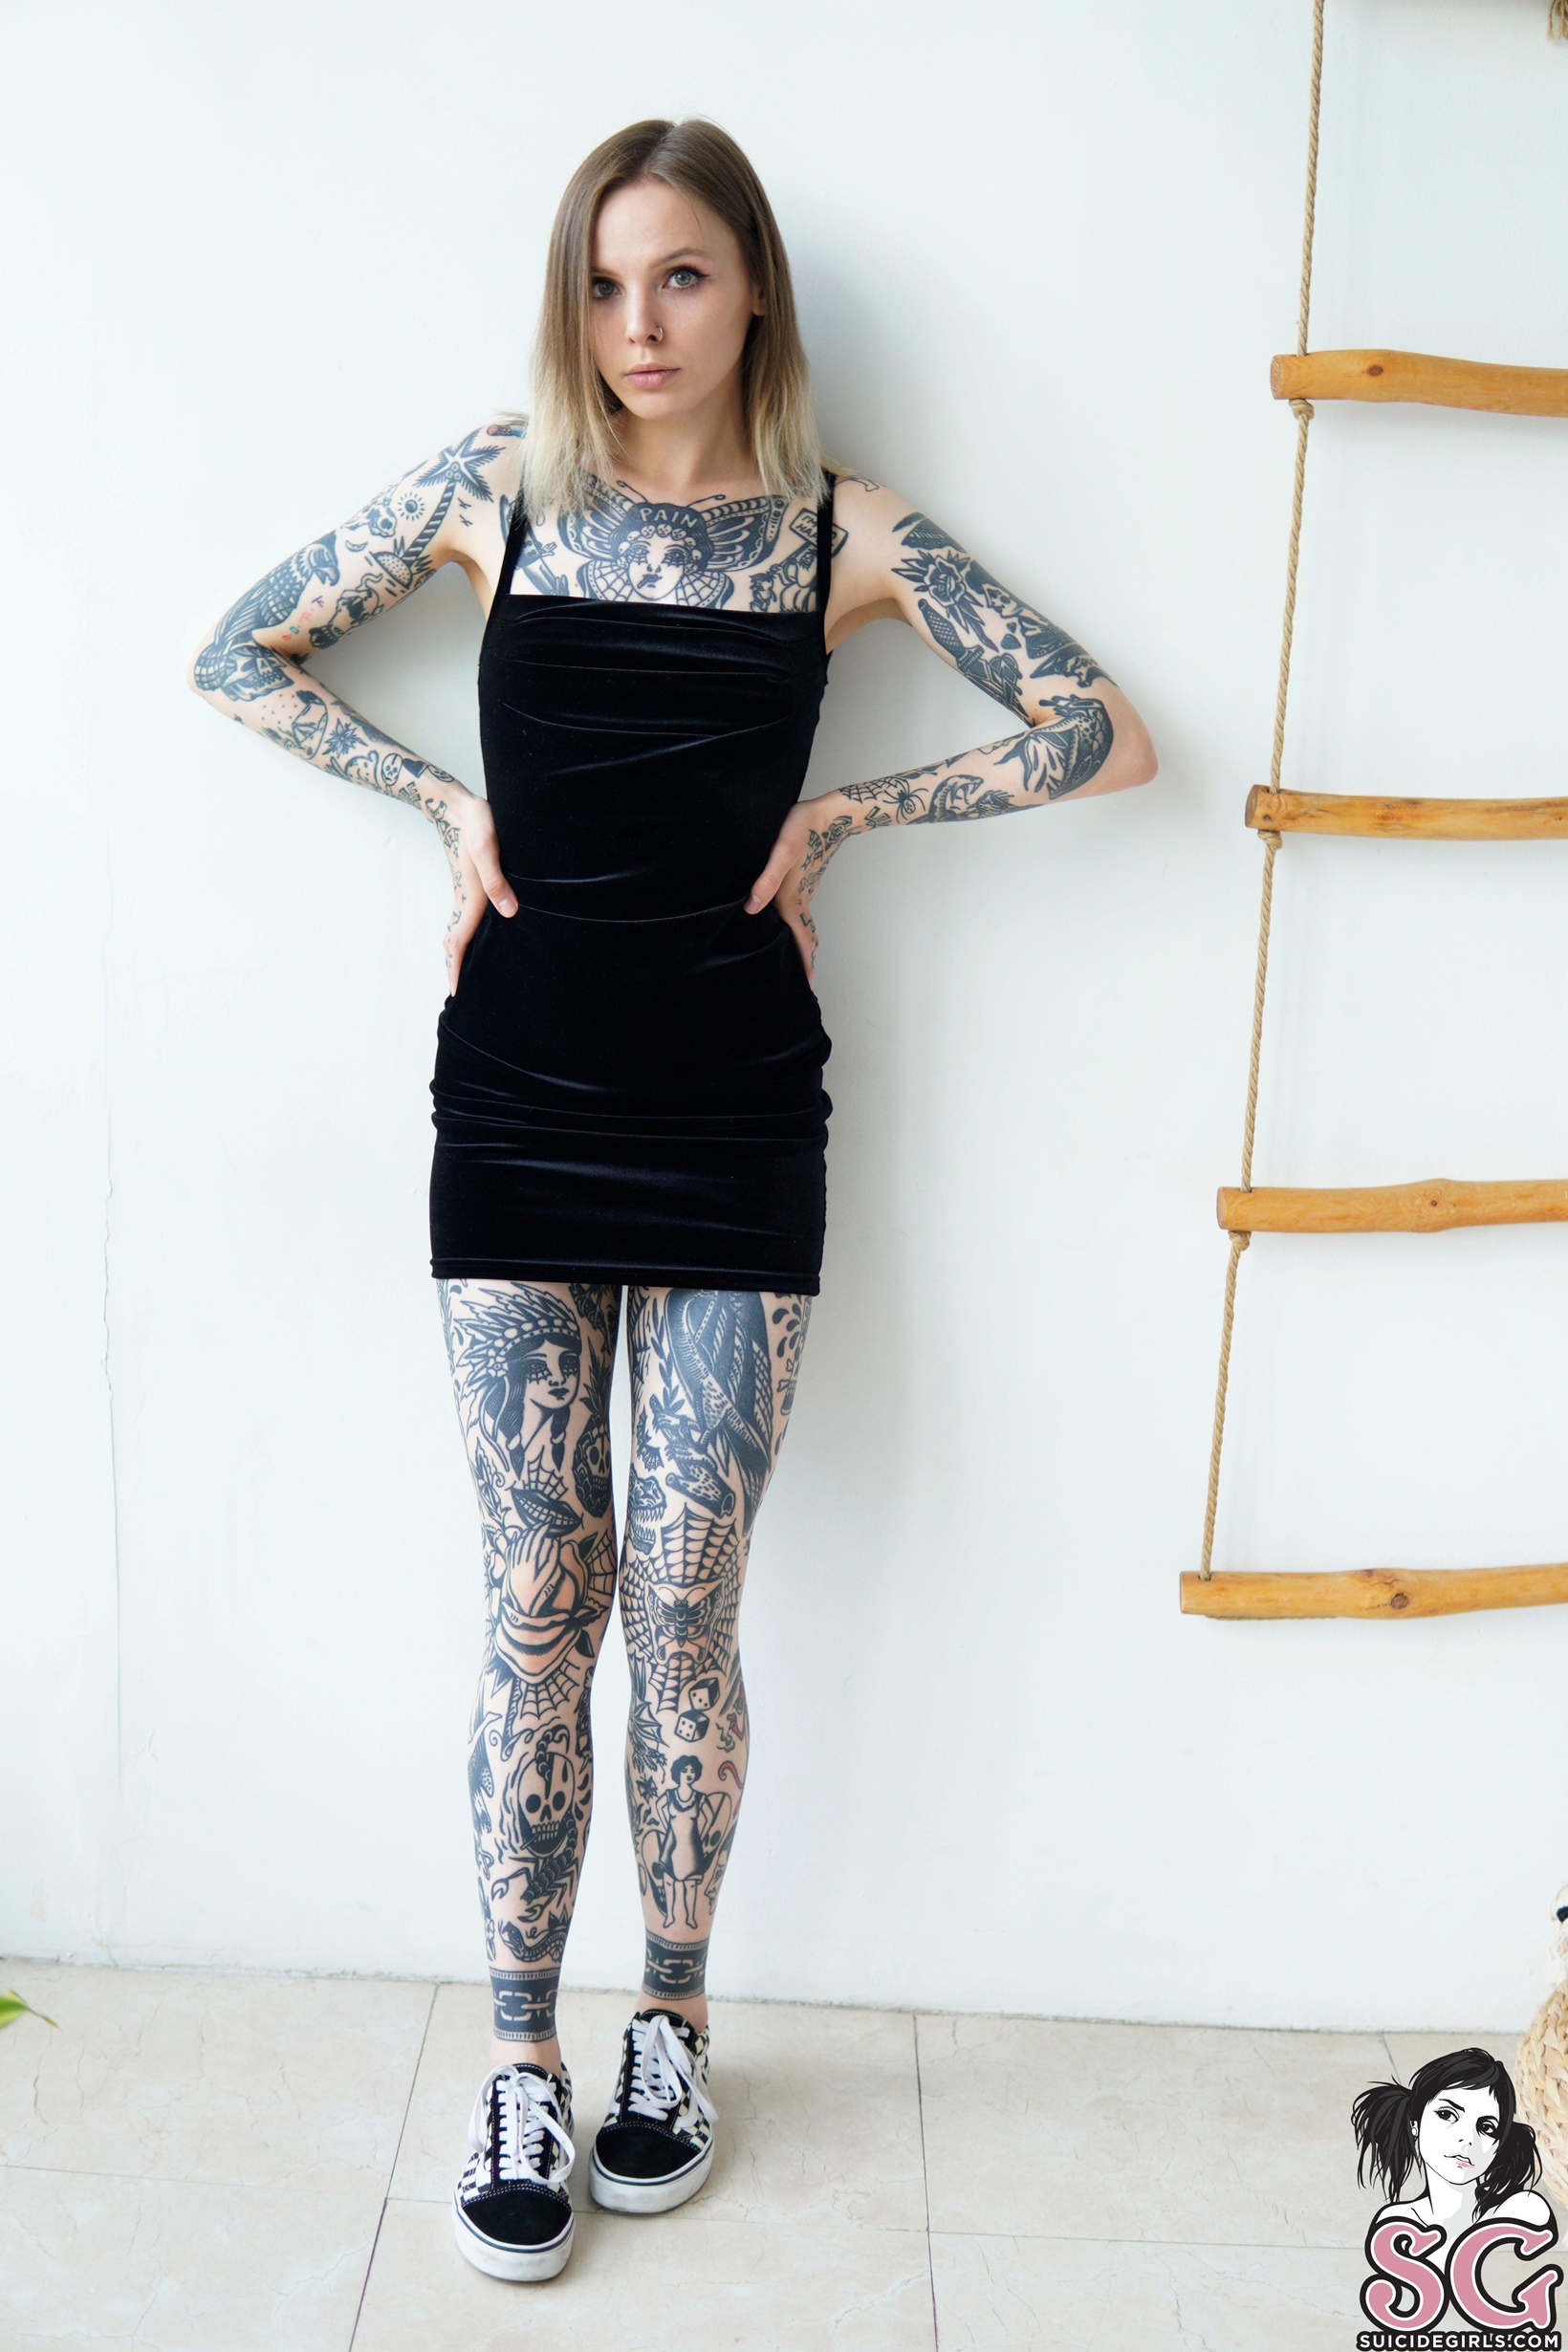 Inked Girls Tattoo Portrait Display Women Model Women Indoors Sneakers Black Dress Bare Shoulders Lo 1640x2460